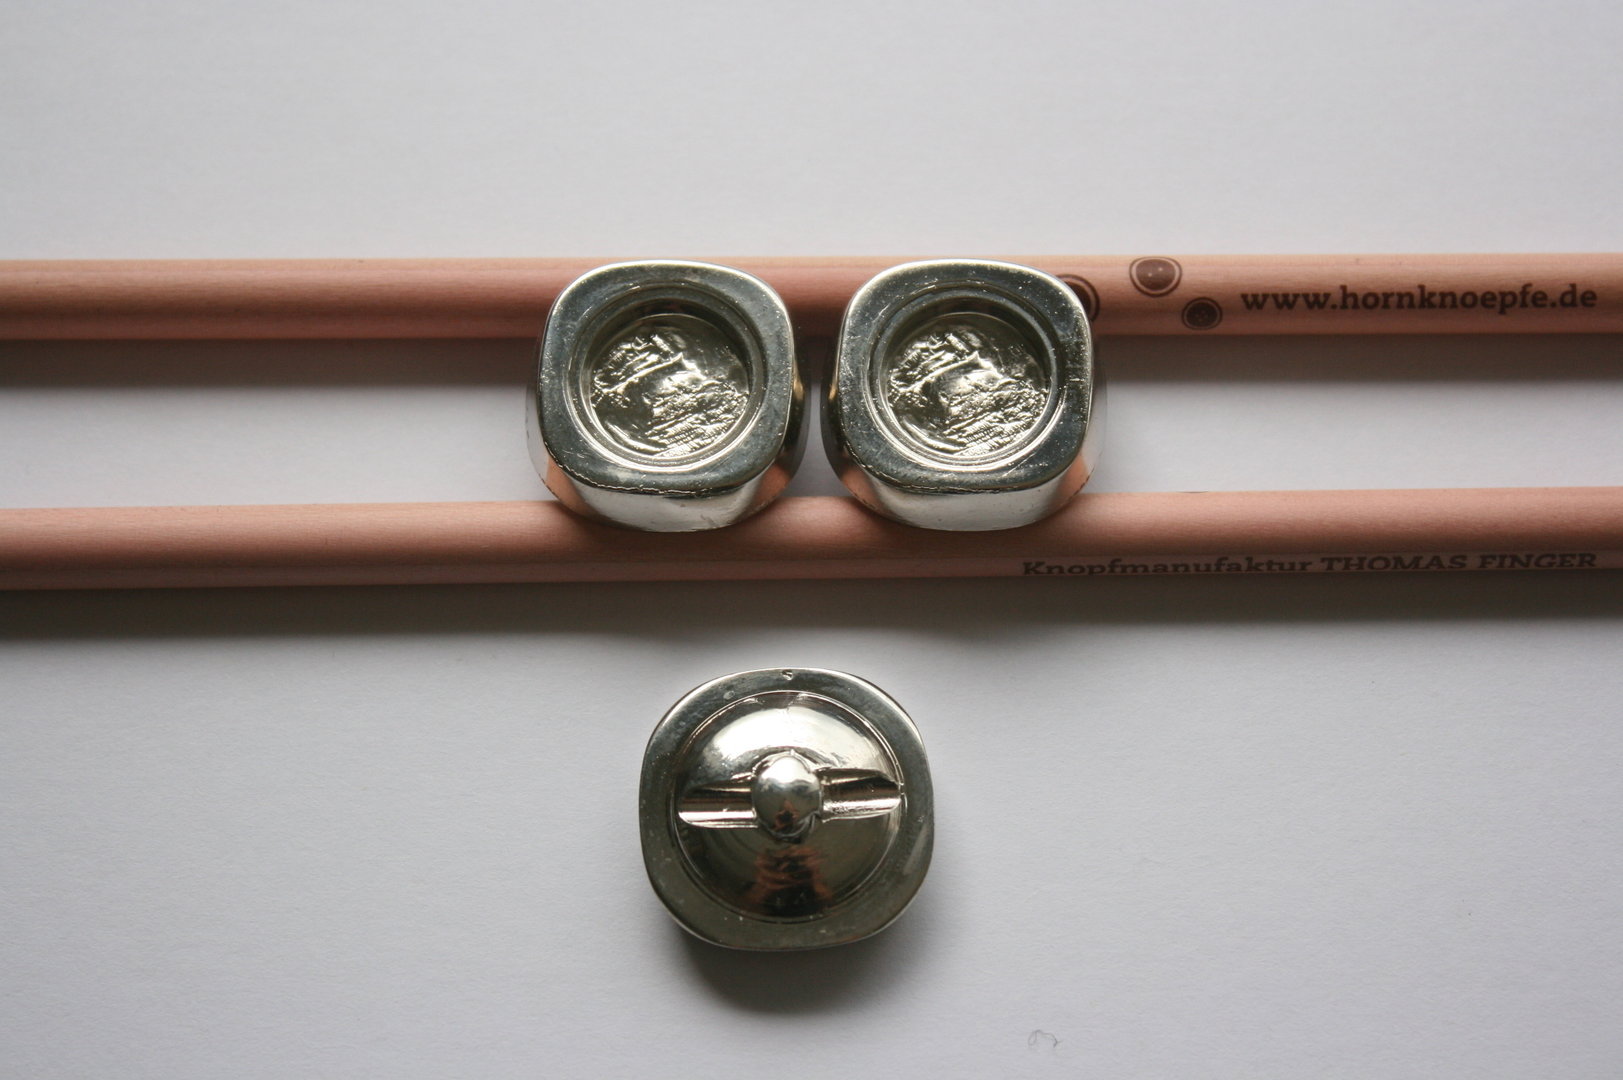 Kunststoffknopf in Metalloptik 28mm